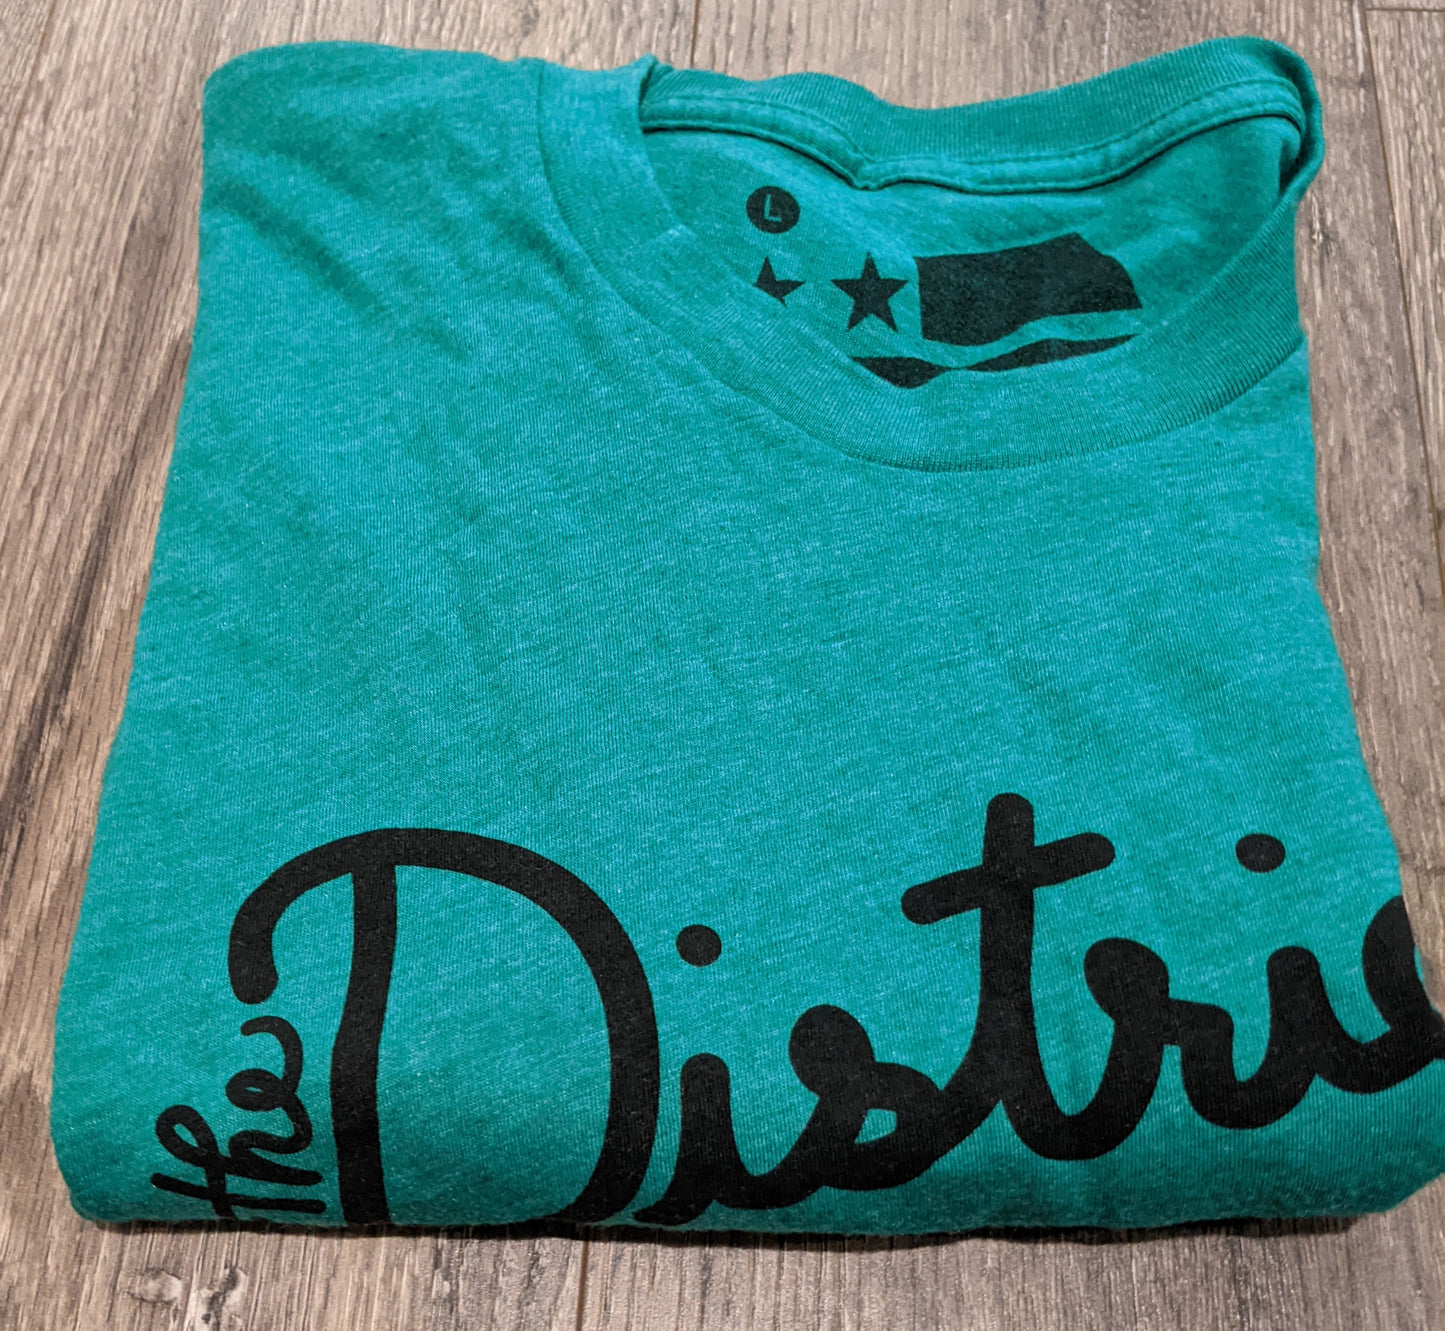 The District Washington DC T-shirt - Teal Green